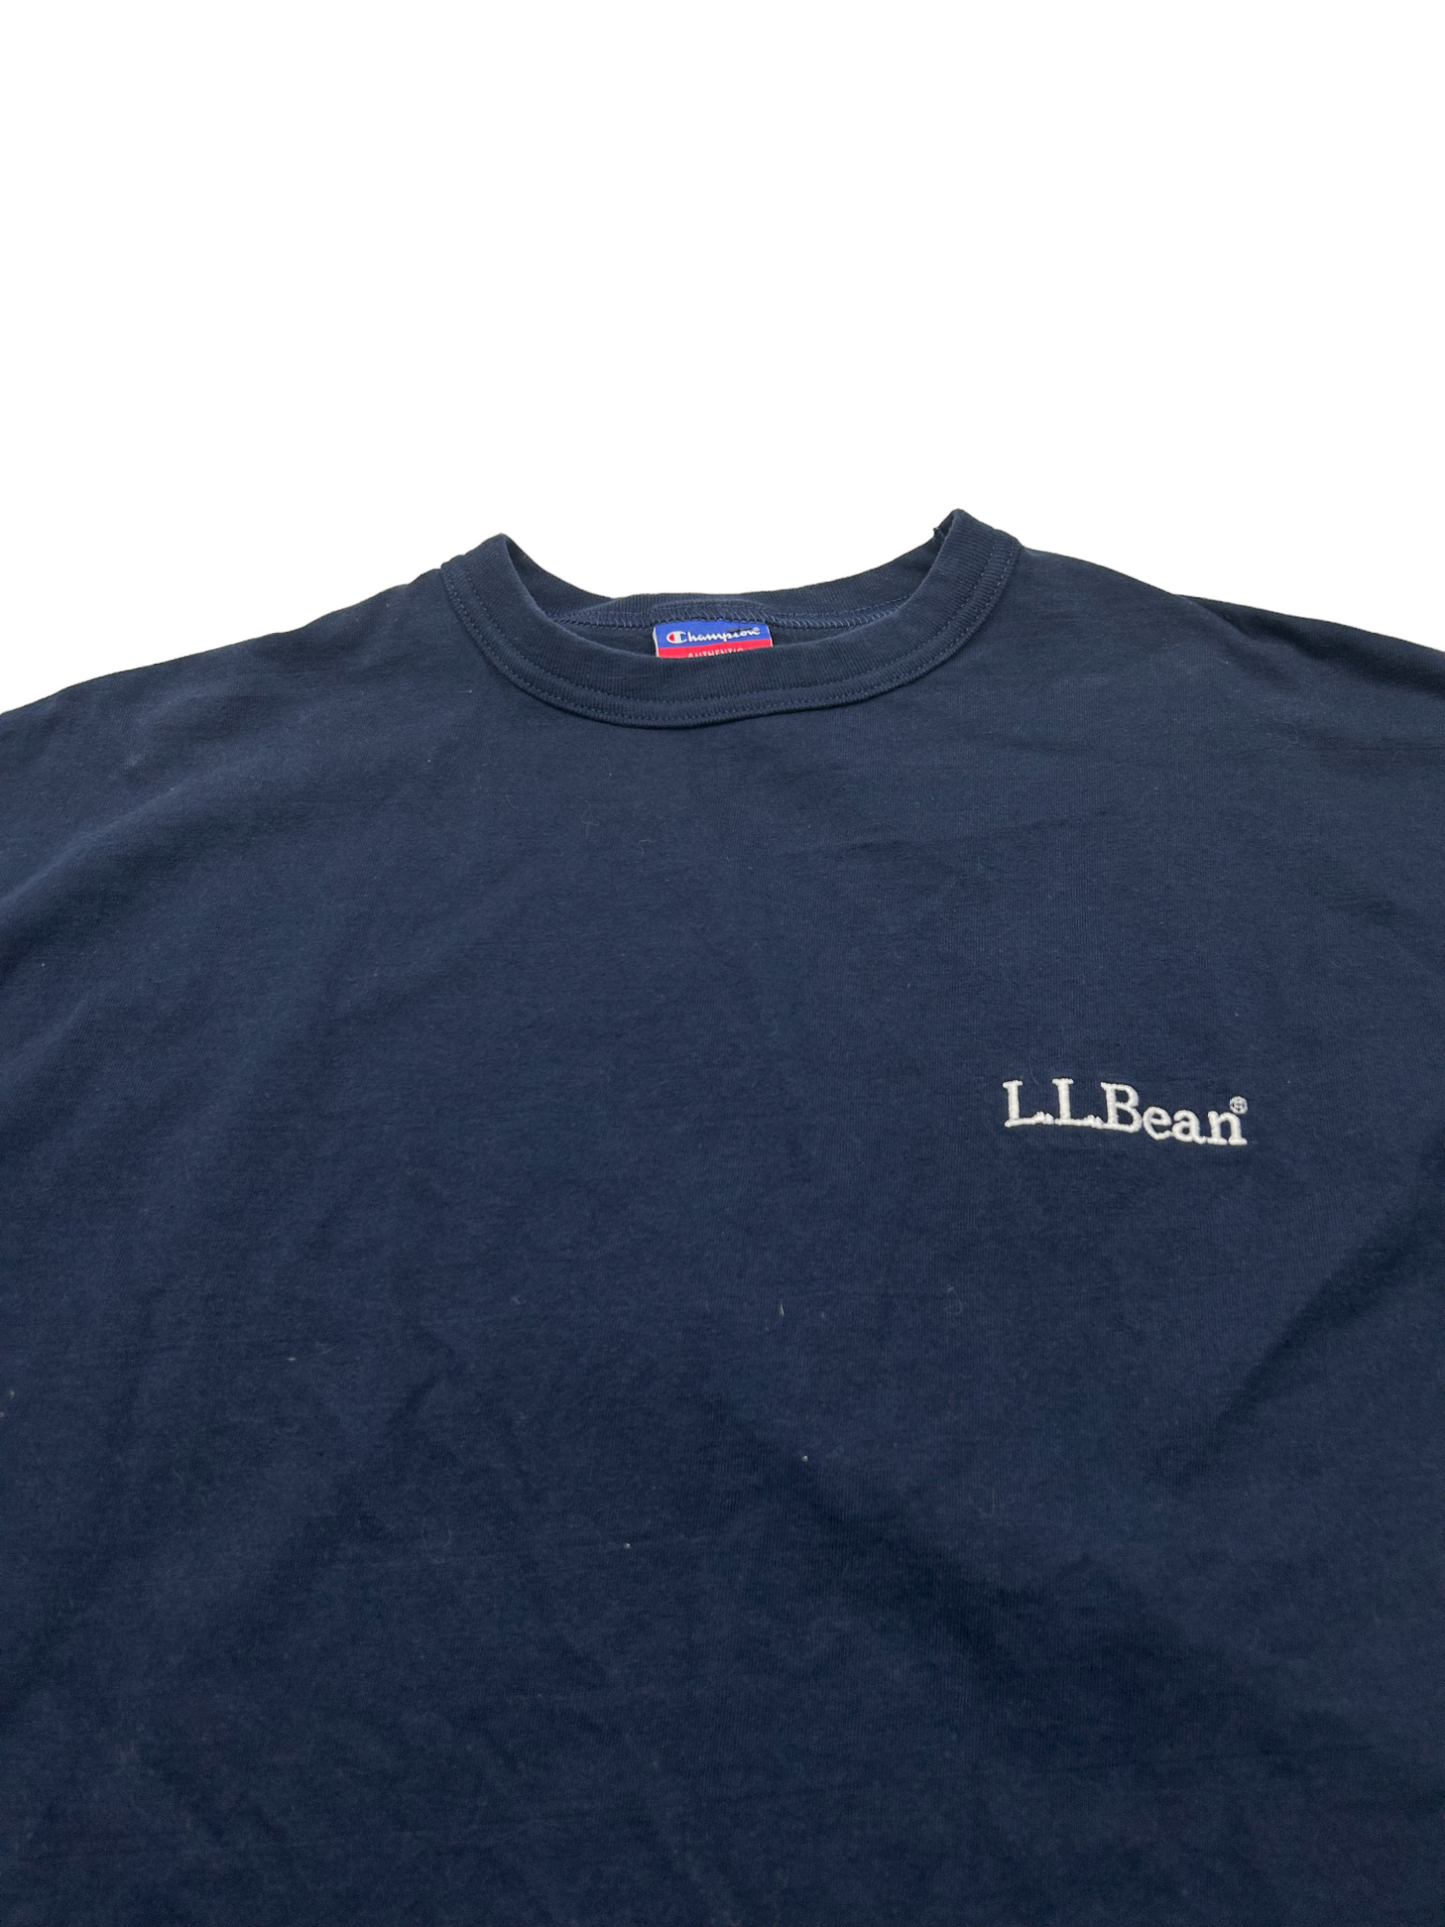 L.L. Bean Blue T-Shirt